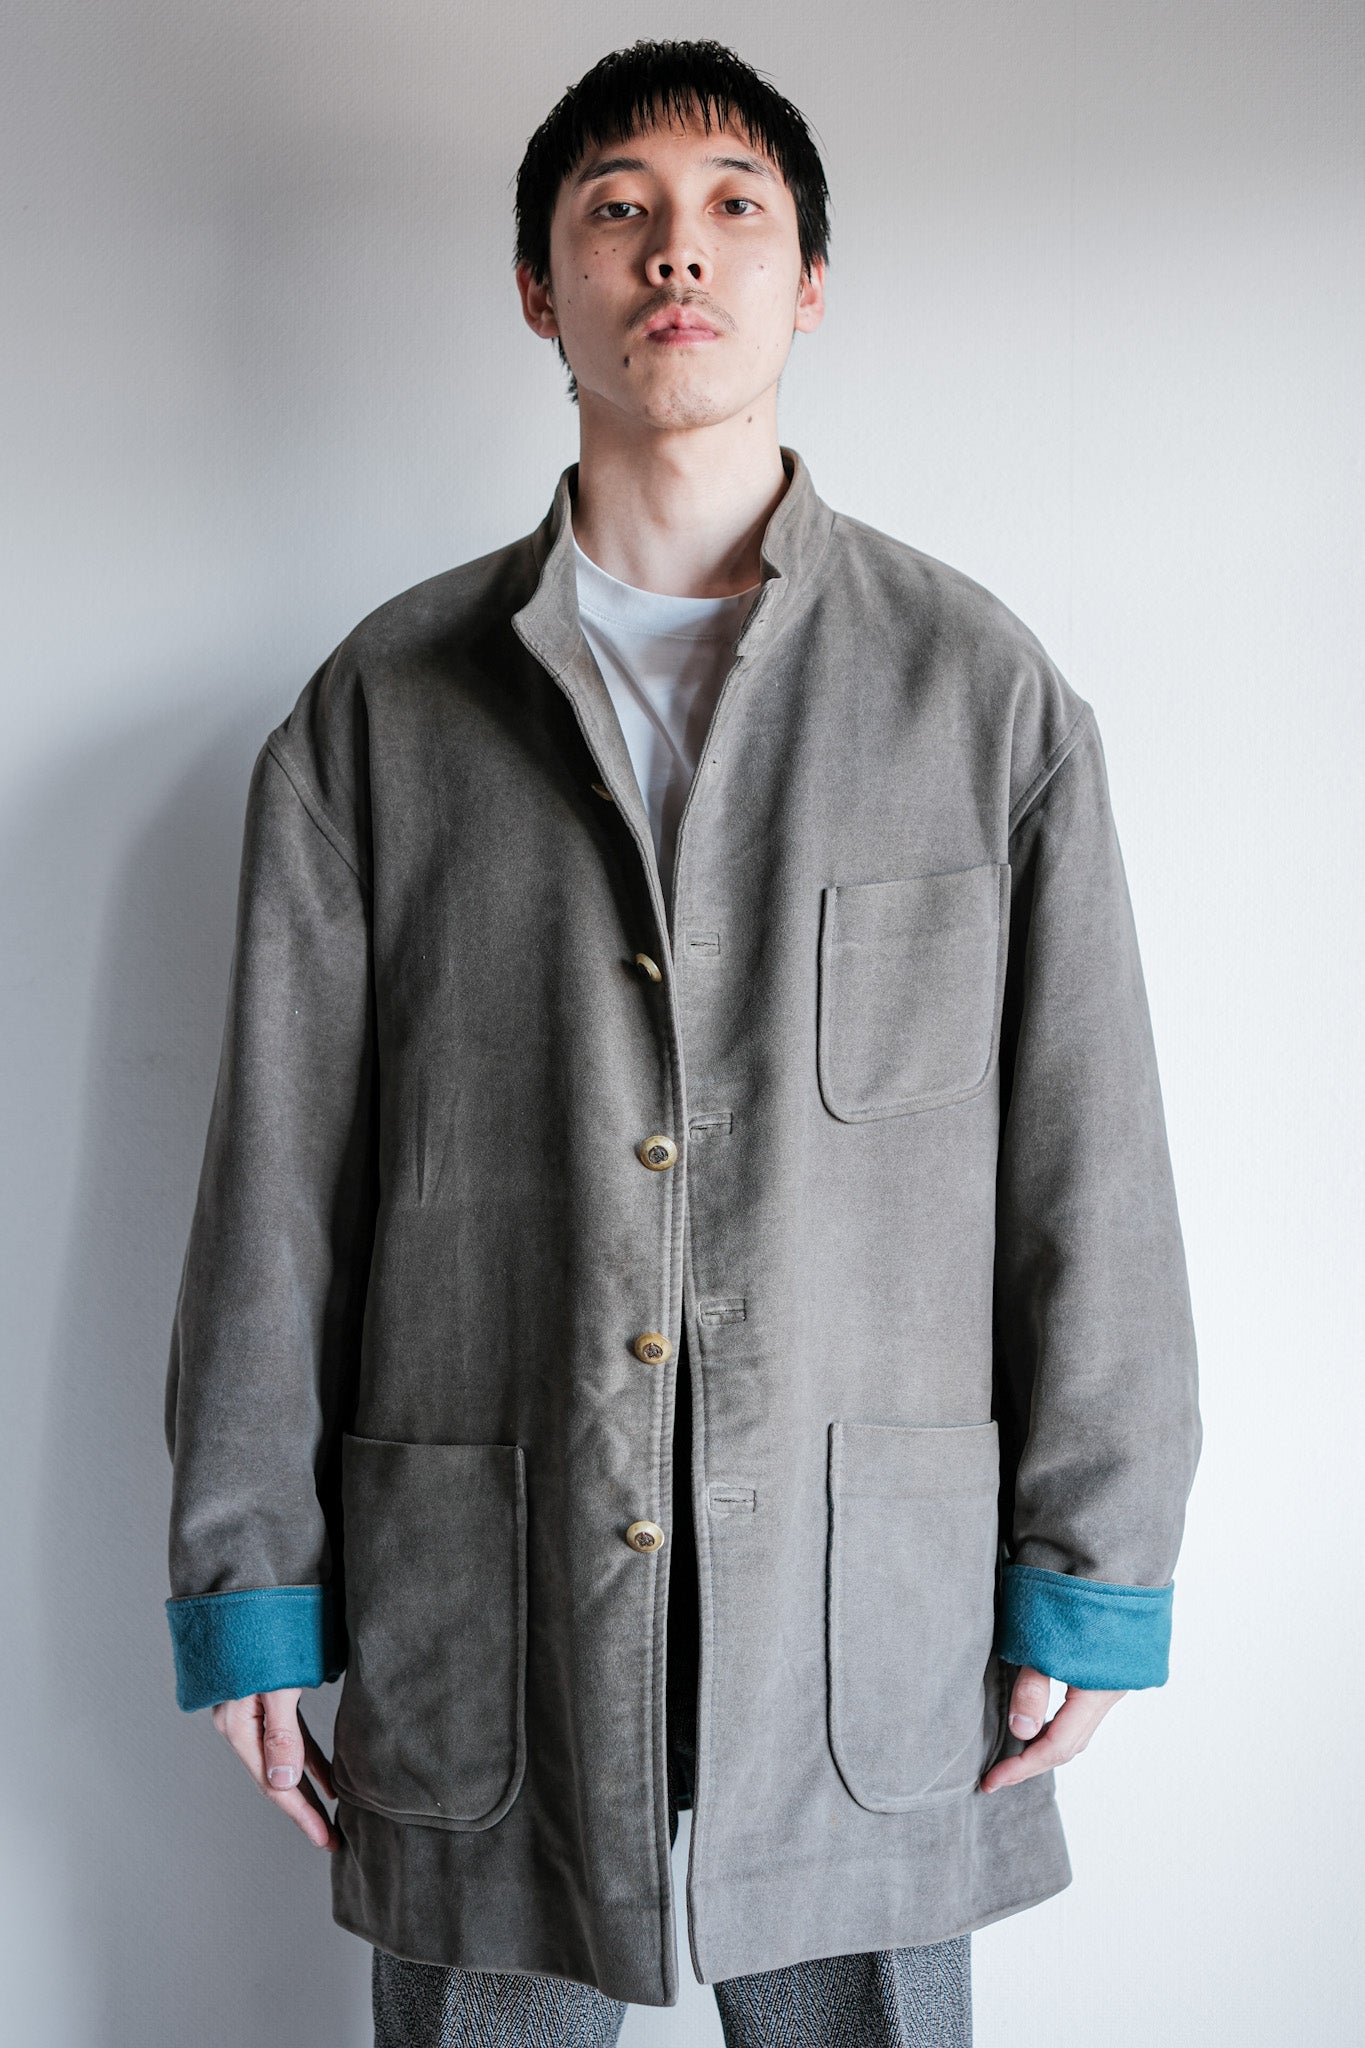 [~ 00 's] Arnys Paris Forestiere 재킷 크기 .50